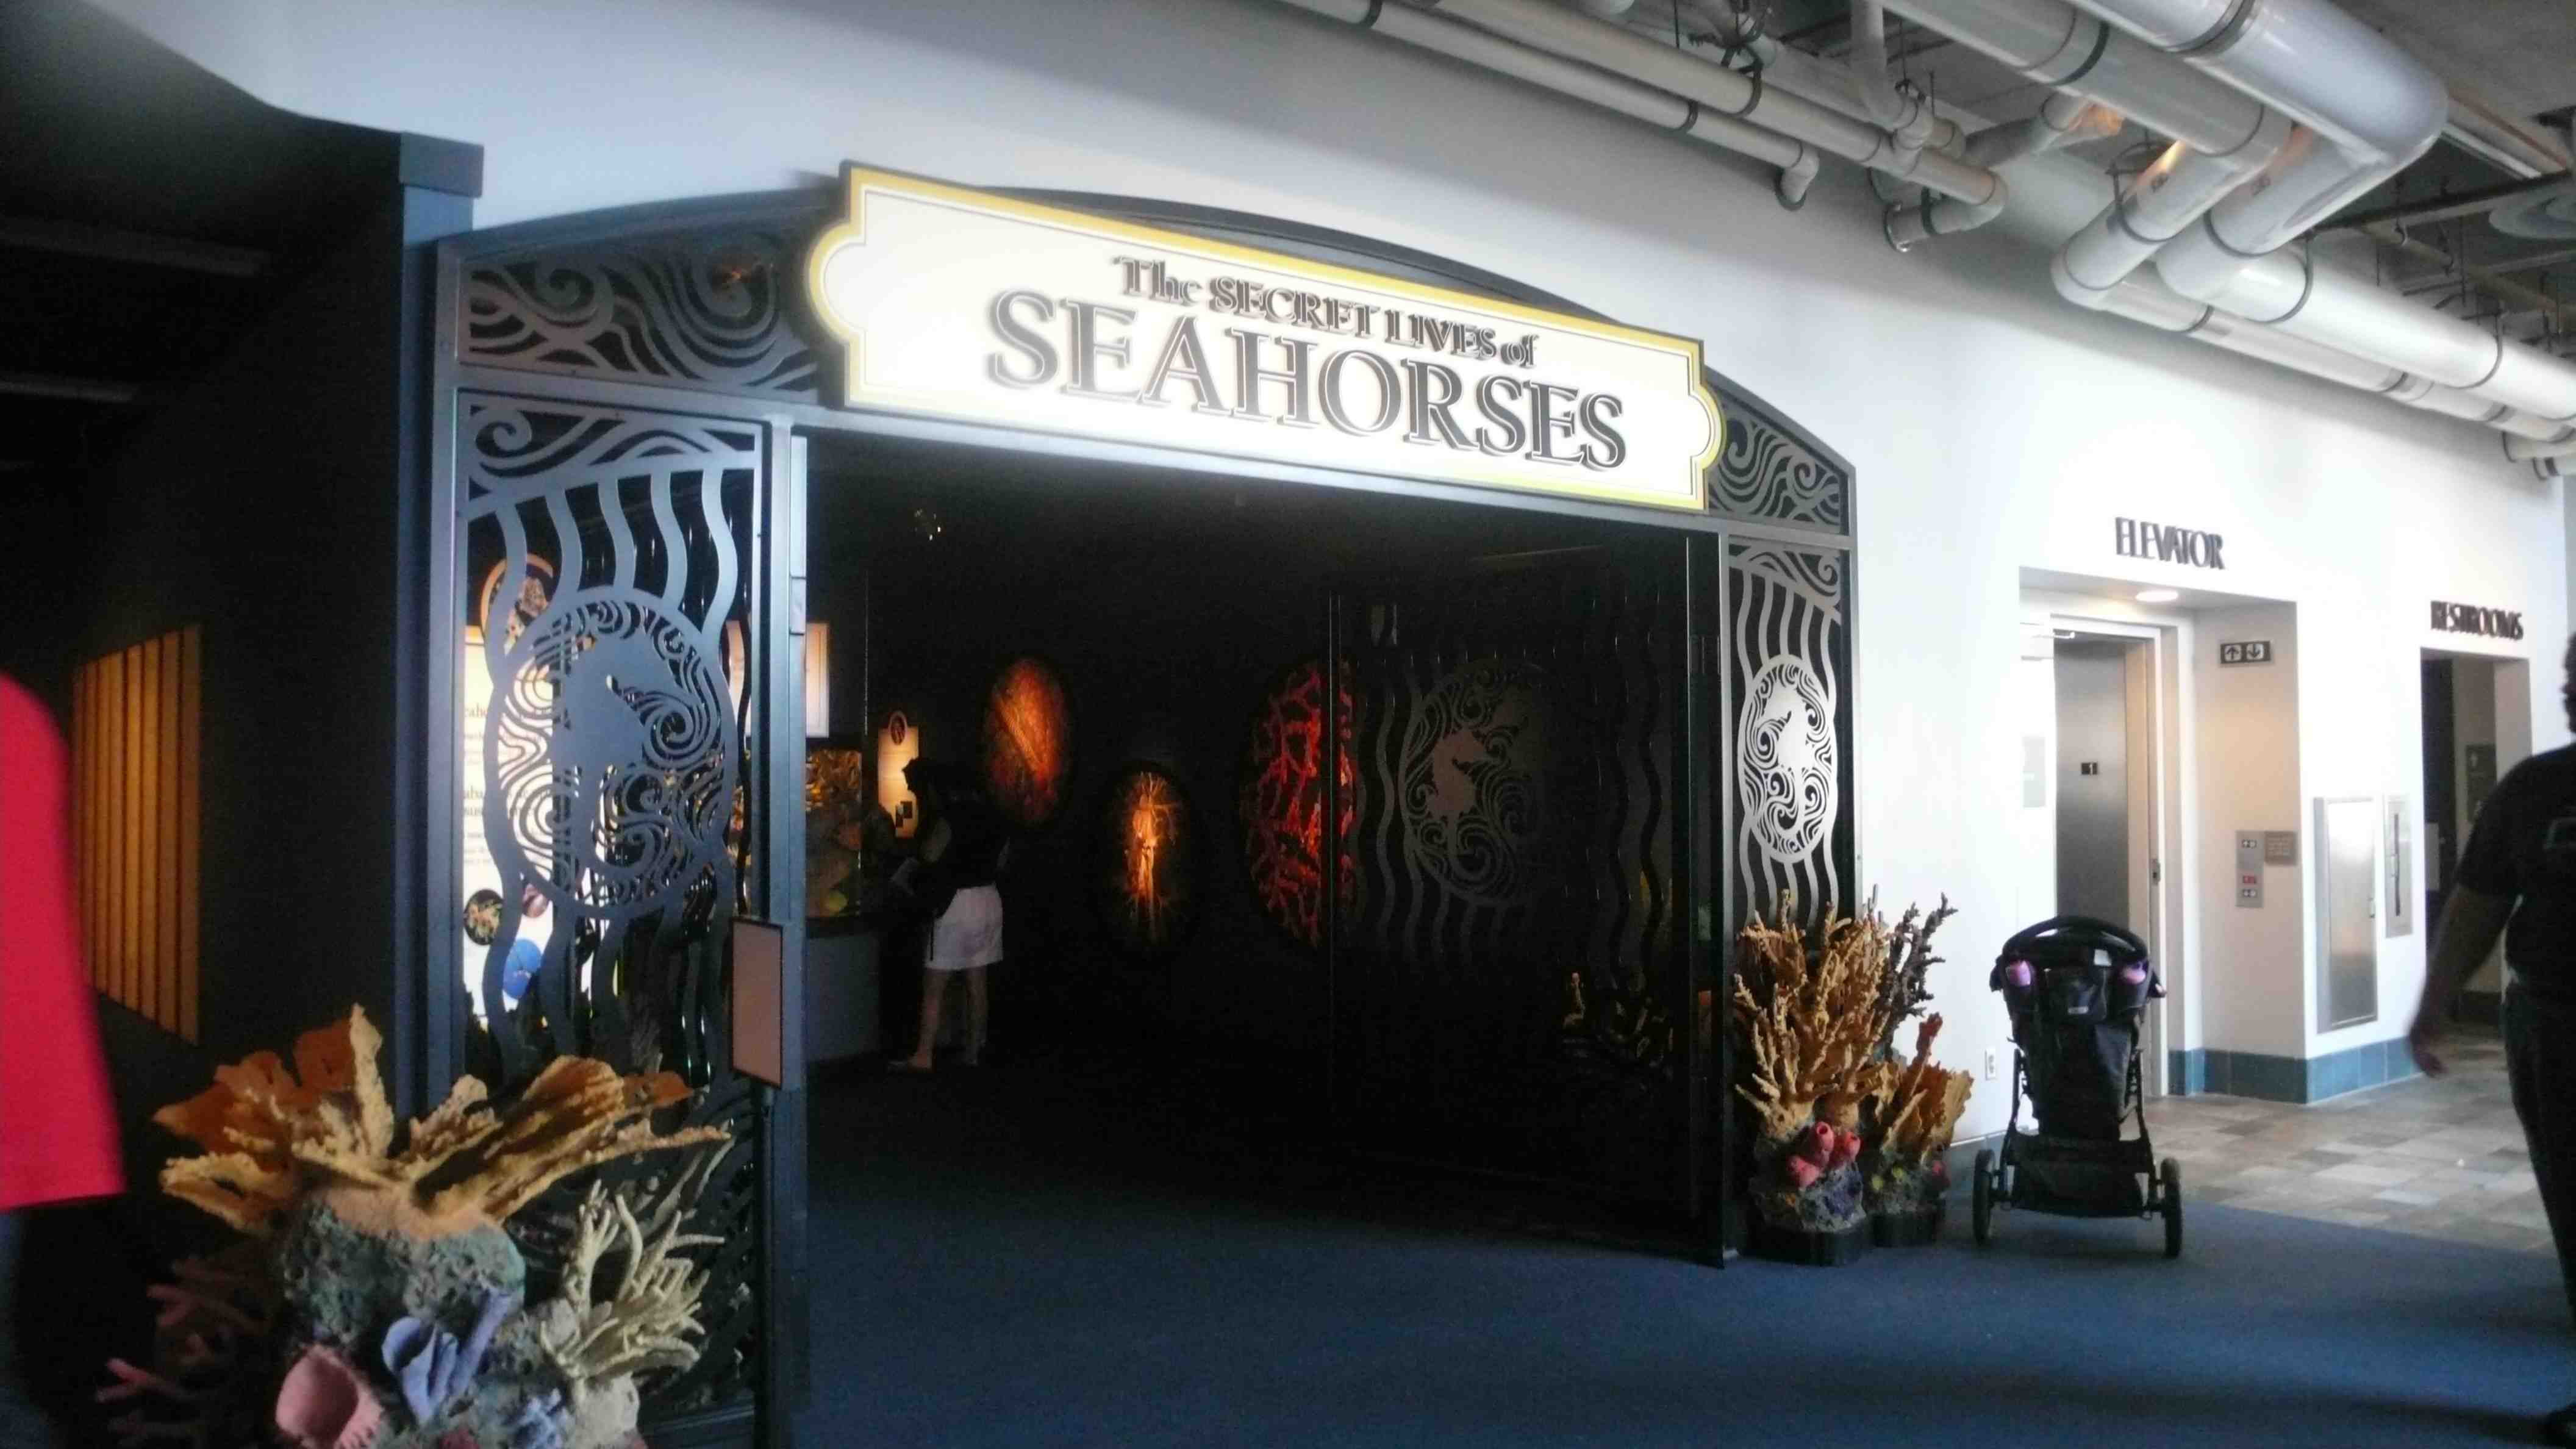 Secret Lives of Seahorses exhibit